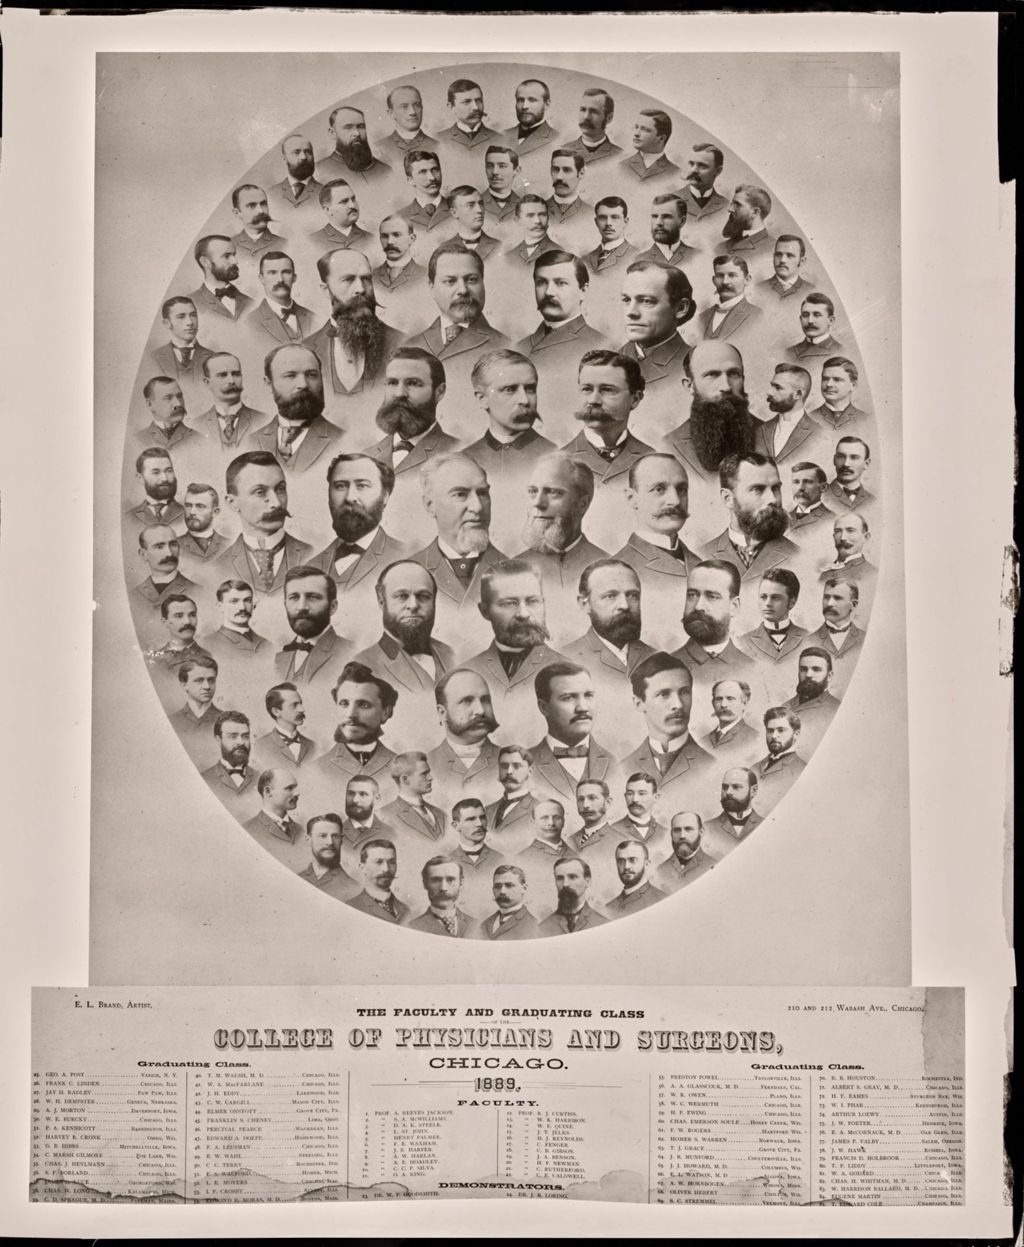 Miniature of 1889 graduating class, University of Illinois College of Medicine